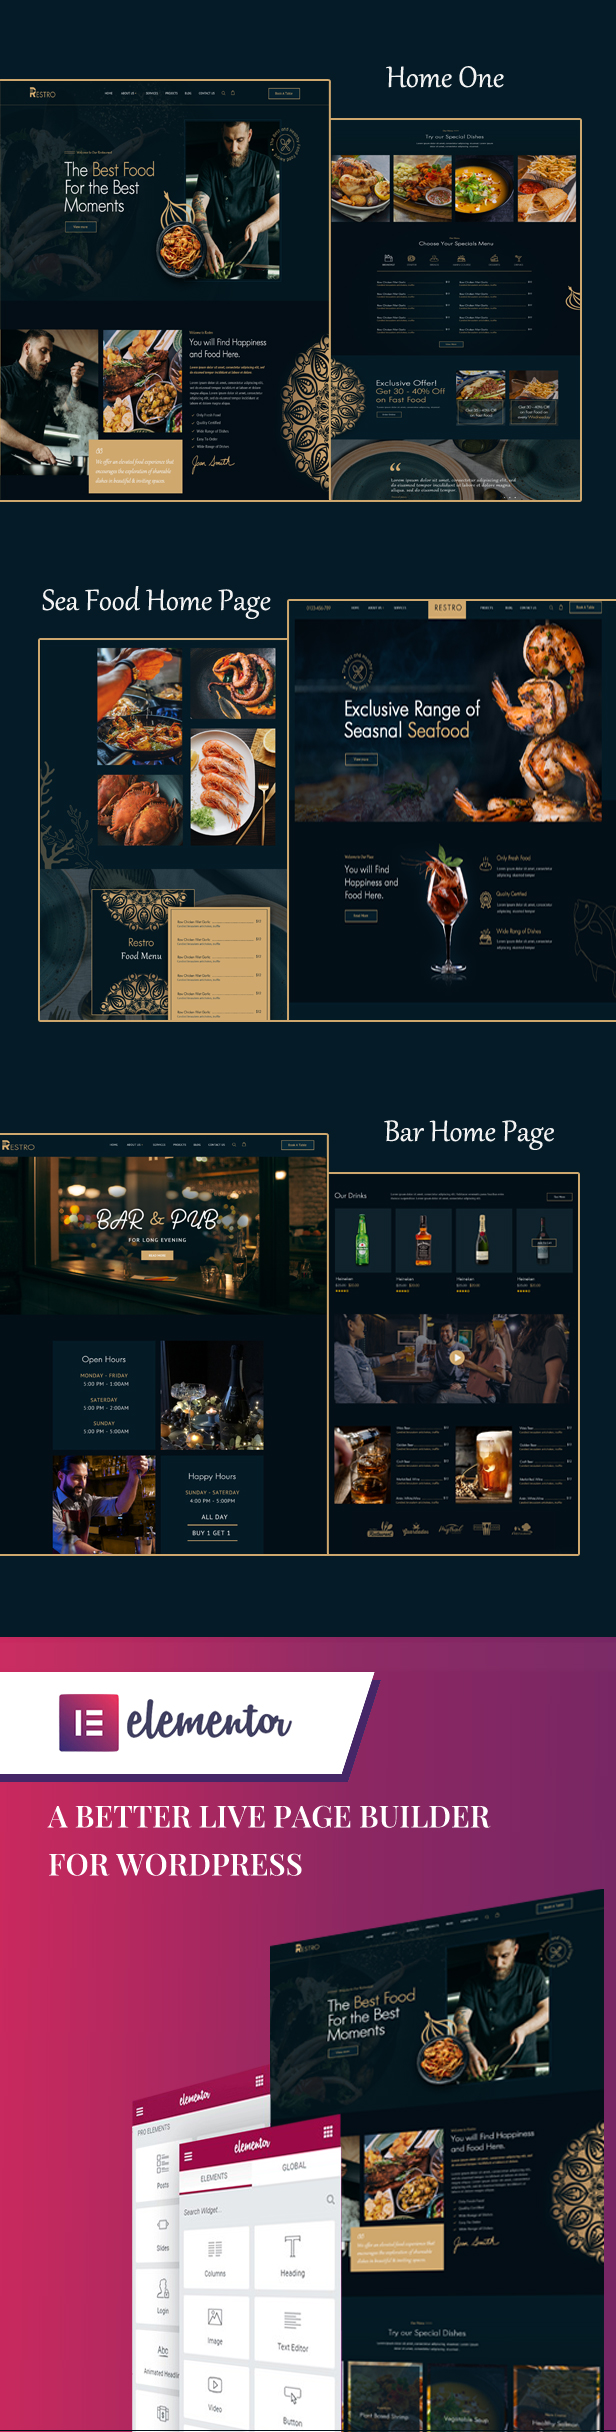 Restro - Restaurant & Bar WordPress Theme - 5